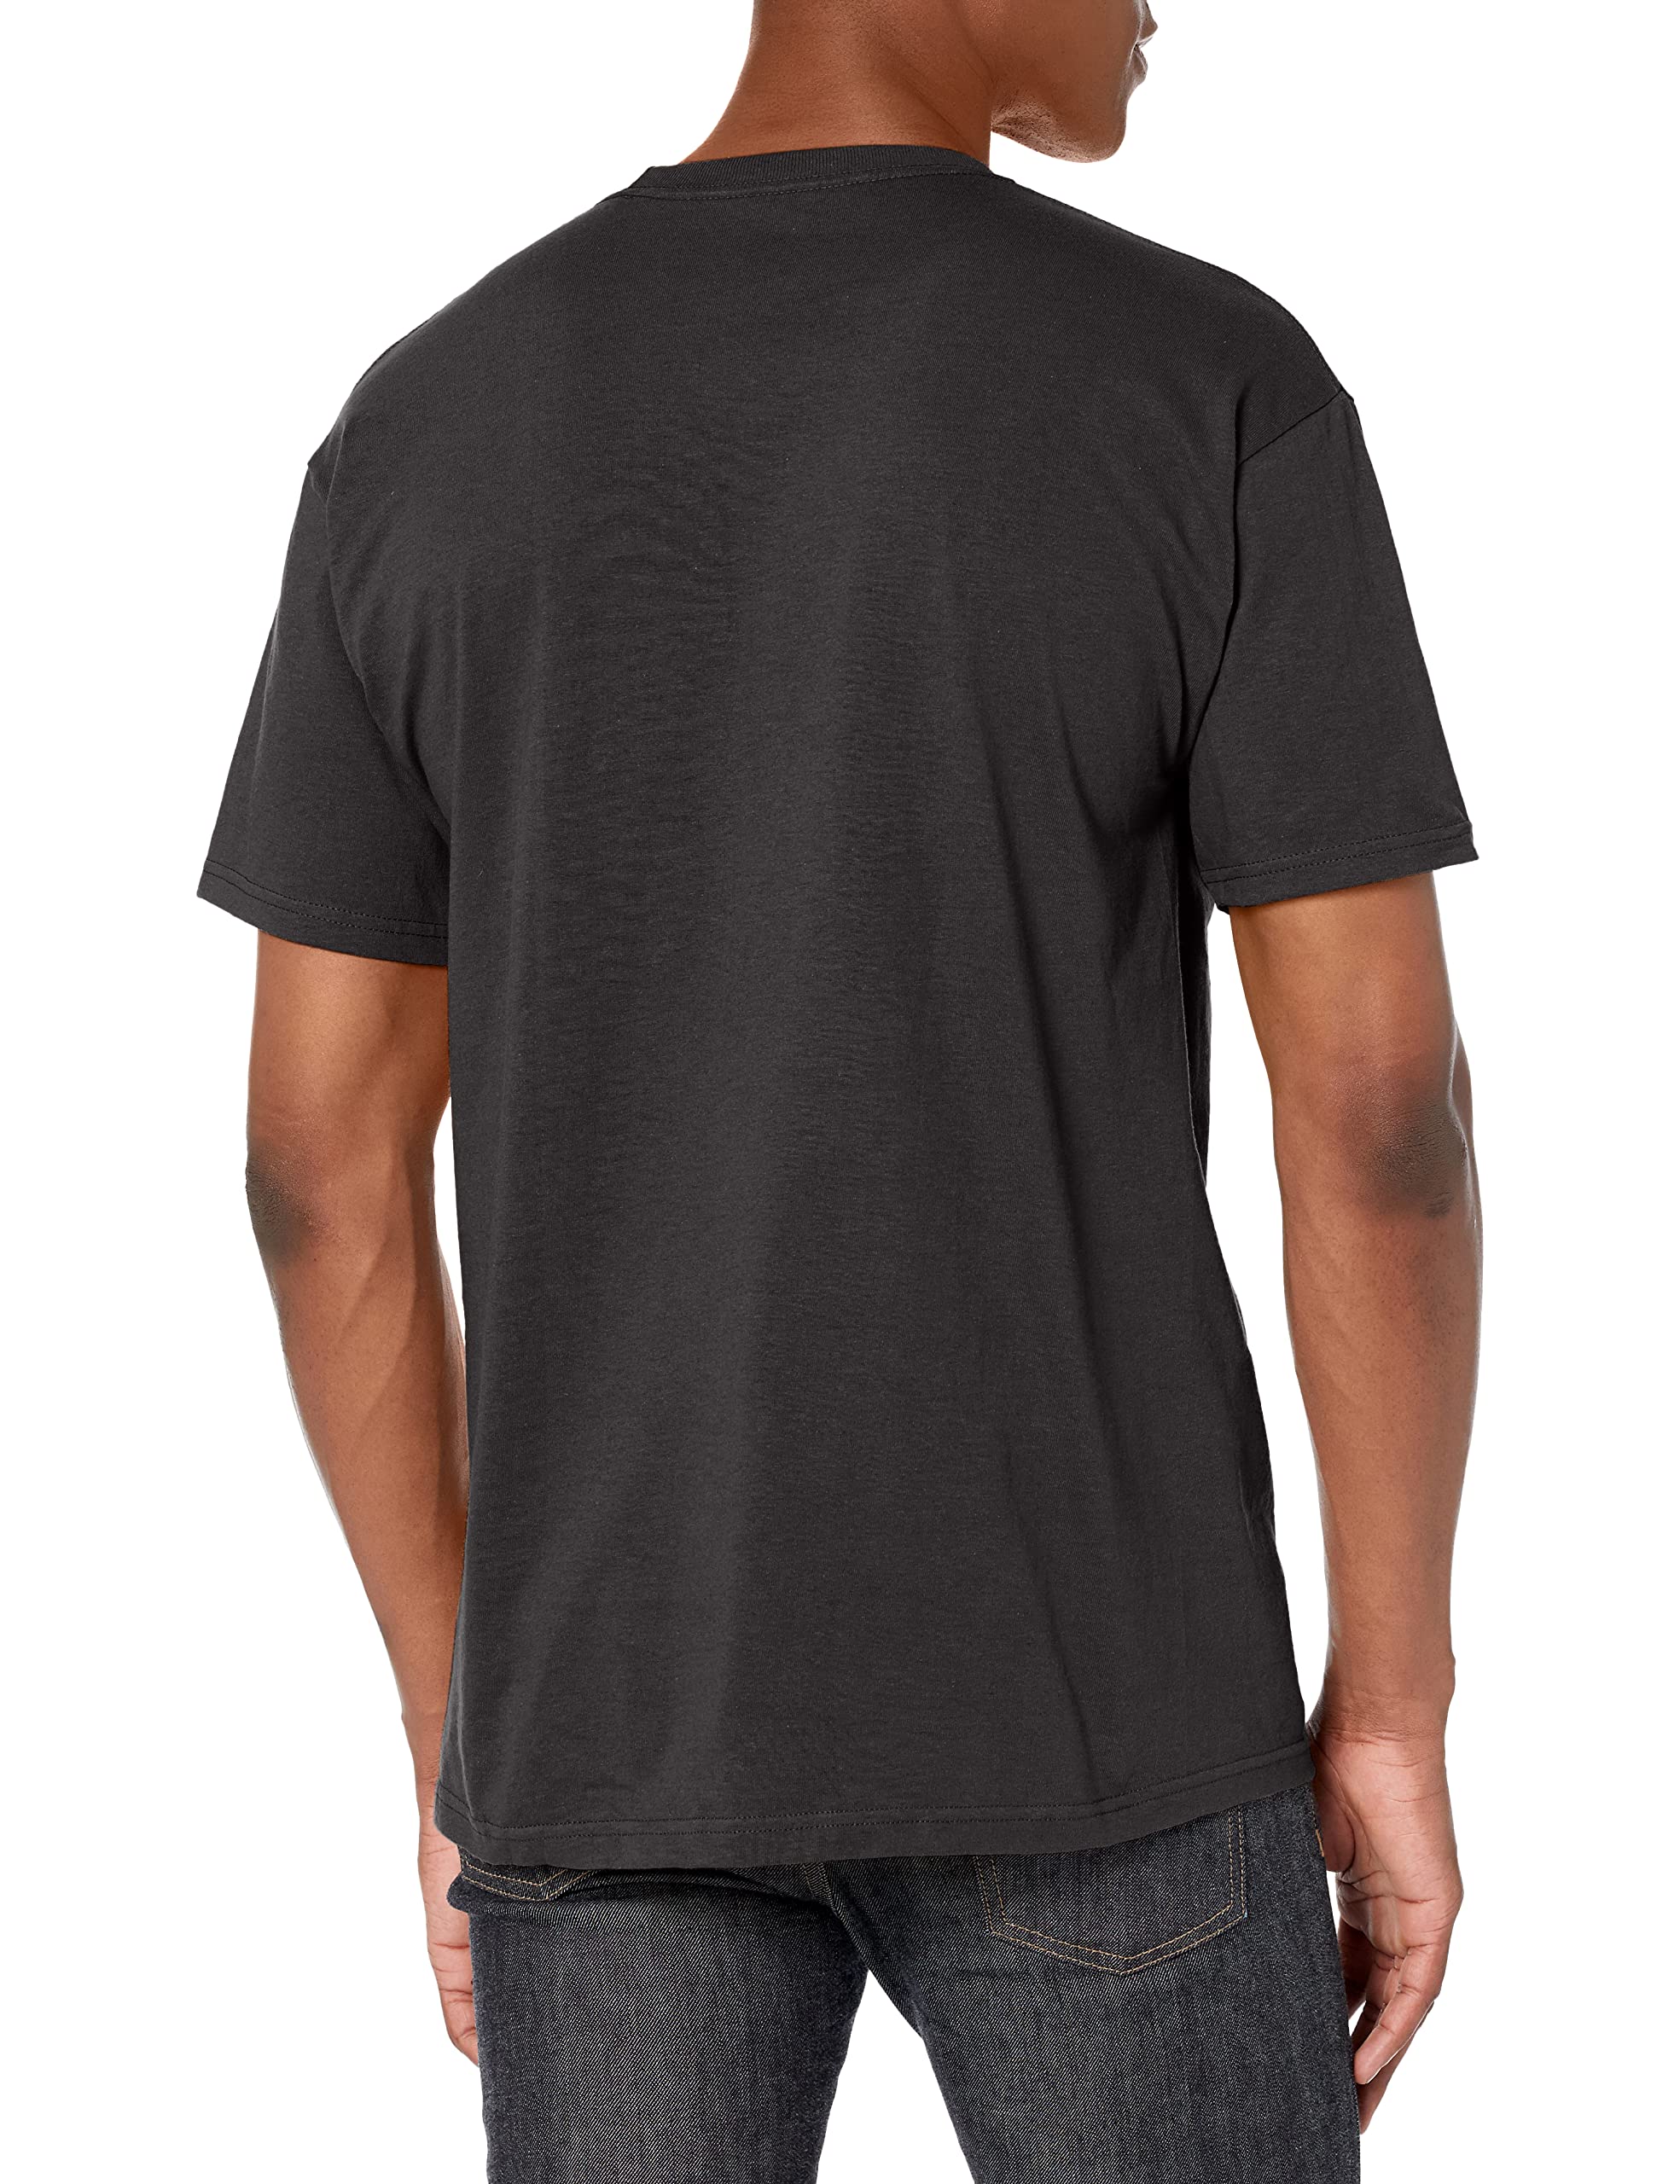 Star Wars Men's Darth Vader Space Father T-Shirt Black, Medium